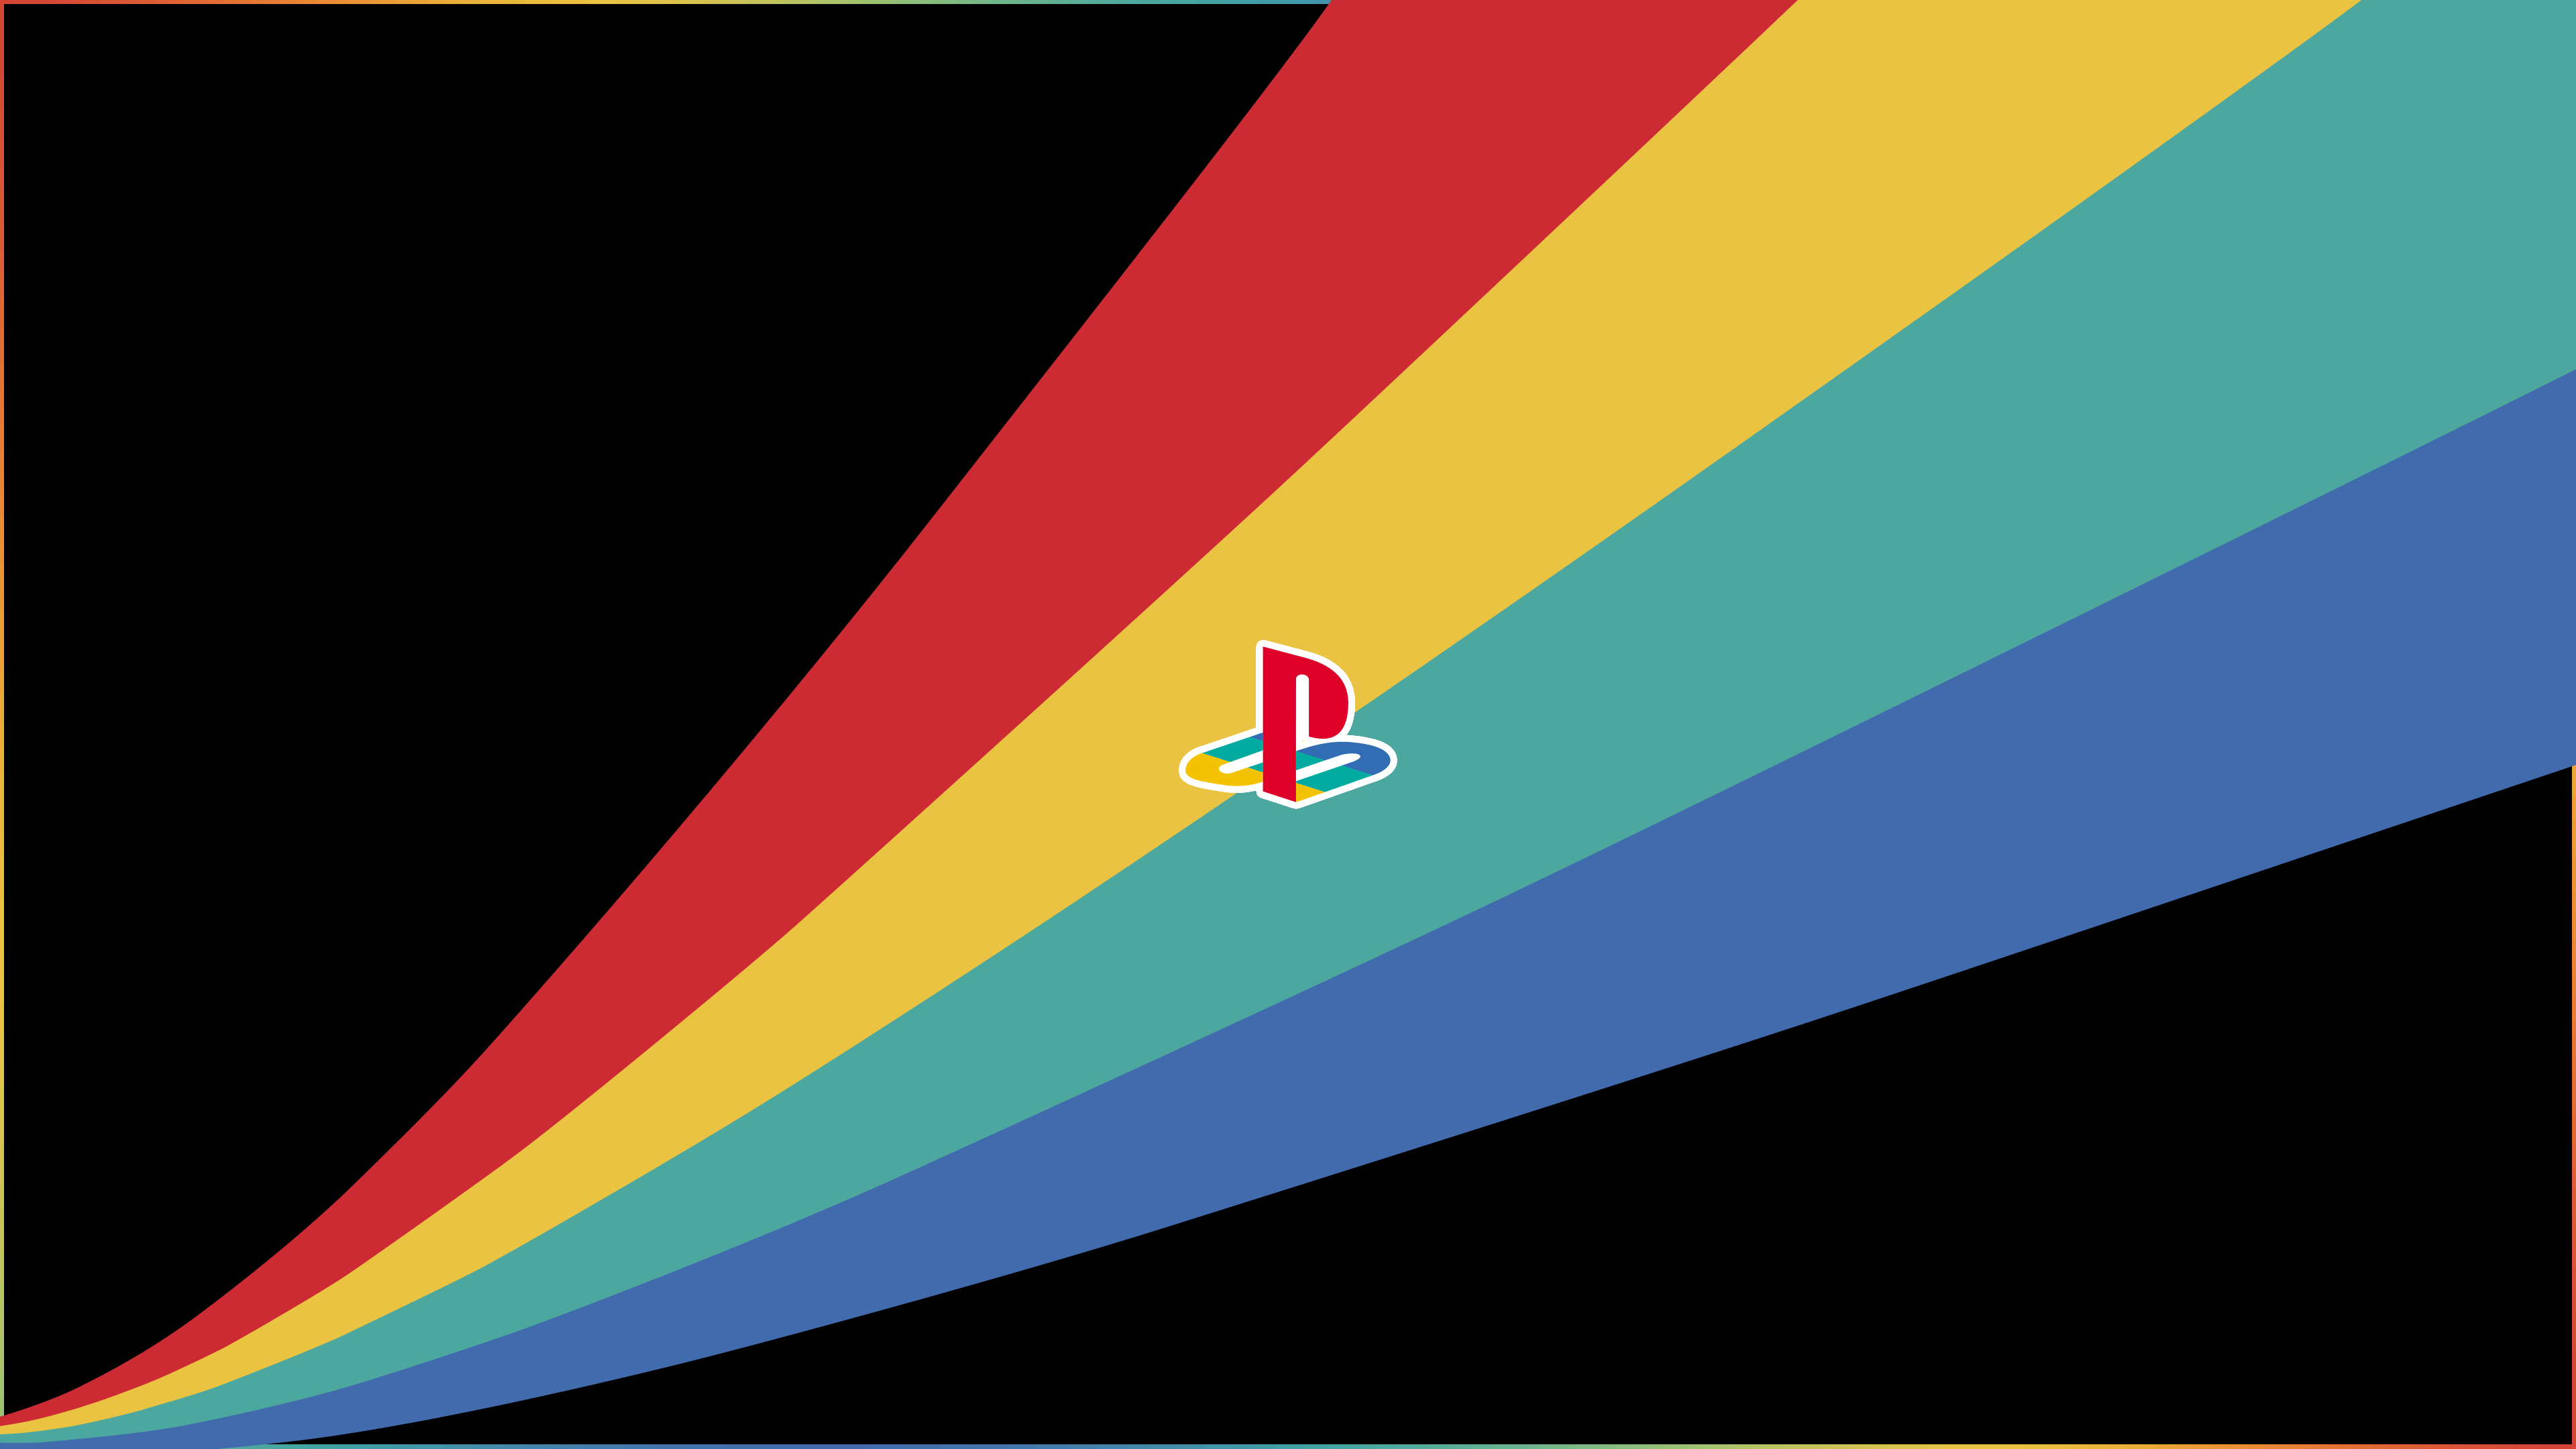 Playstation Minimalist Curve Burst [3840x2160]. R wallpaper, Wallpaper, Desktop background image